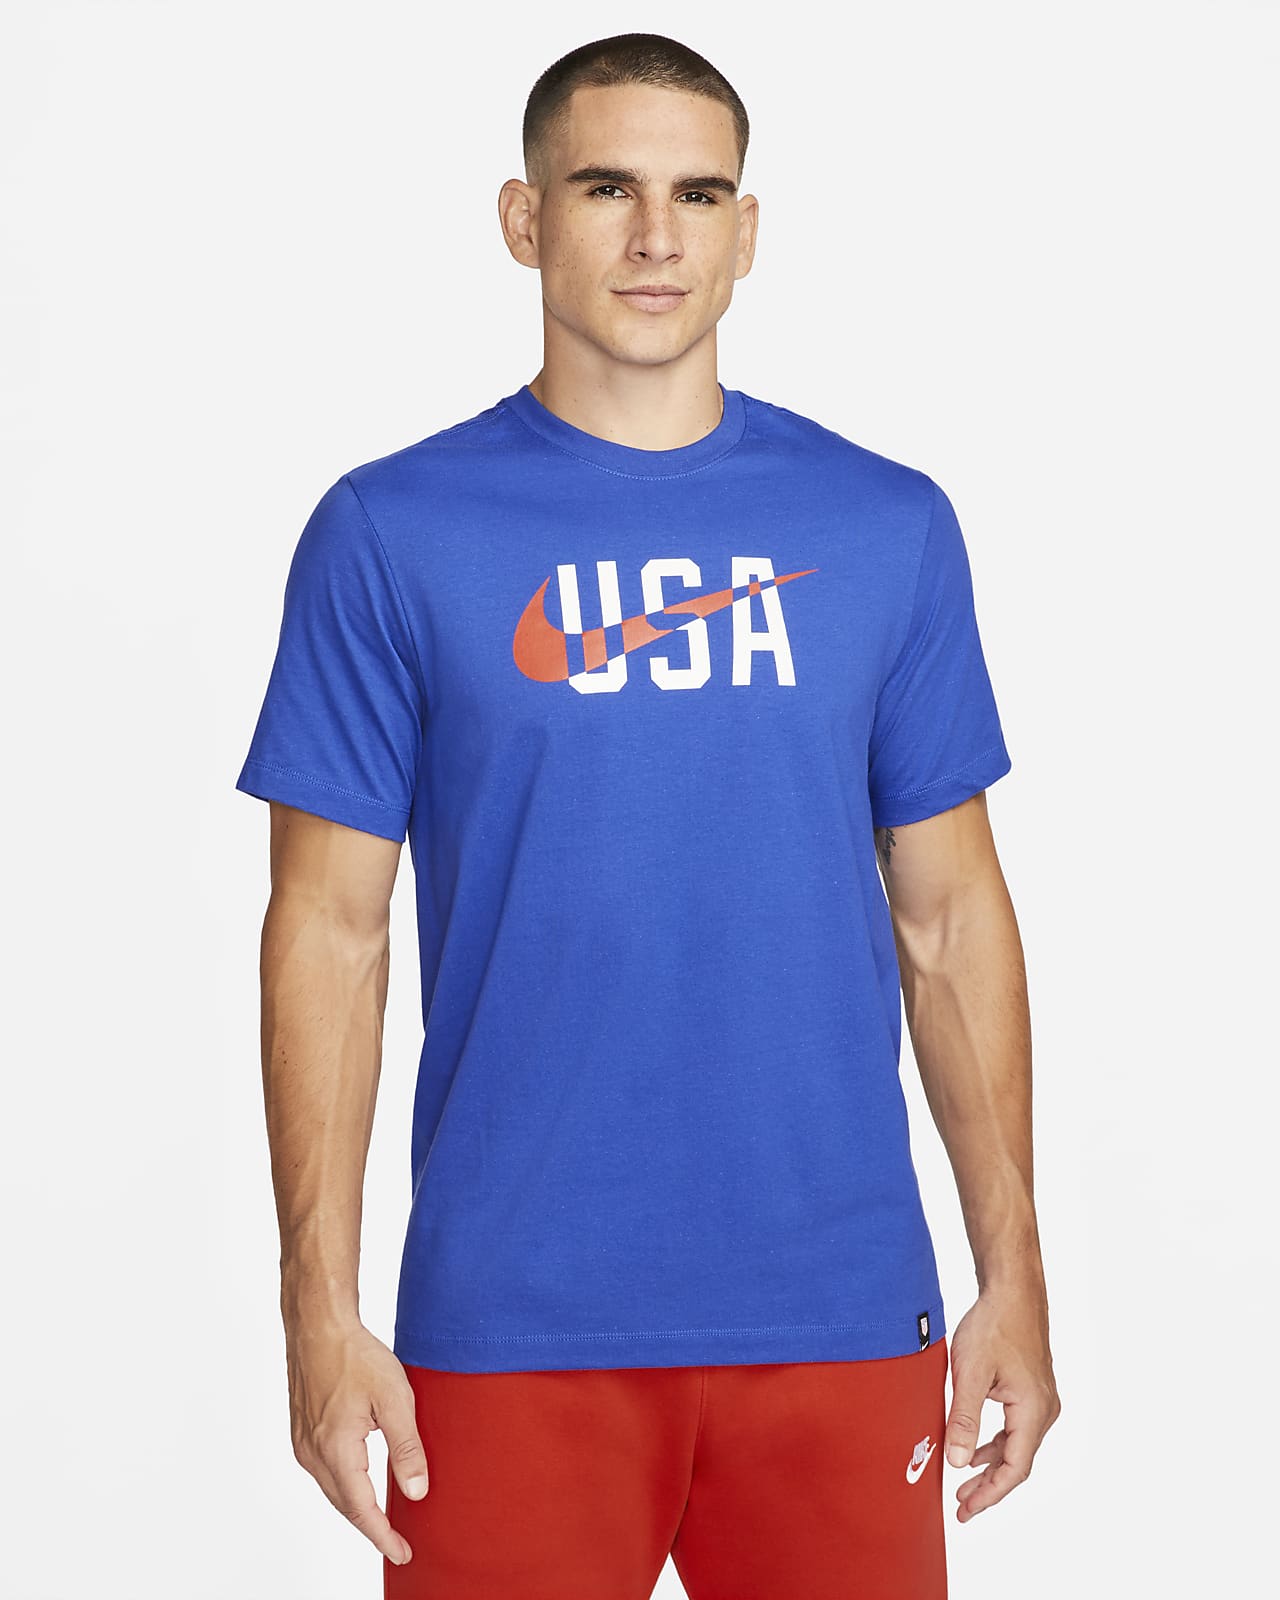 Description decorate studio U.S. Swoosh Men's Nike T-Shirt. Nike.com